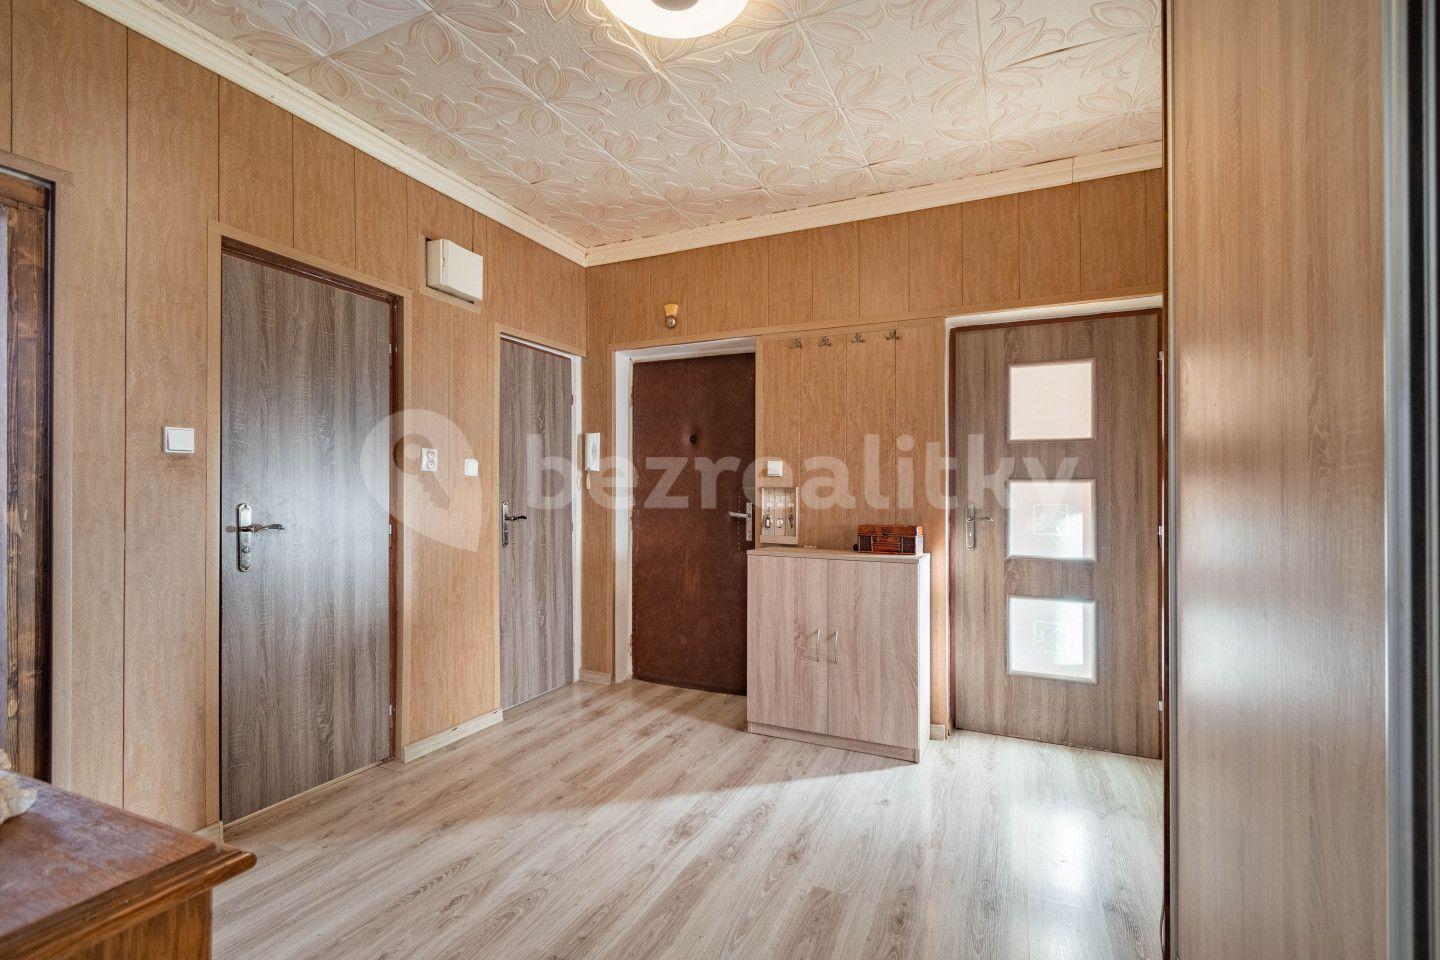 Predaj bytu 3-izbový 76 m², Vitry, Kladno, Středočeský kraj